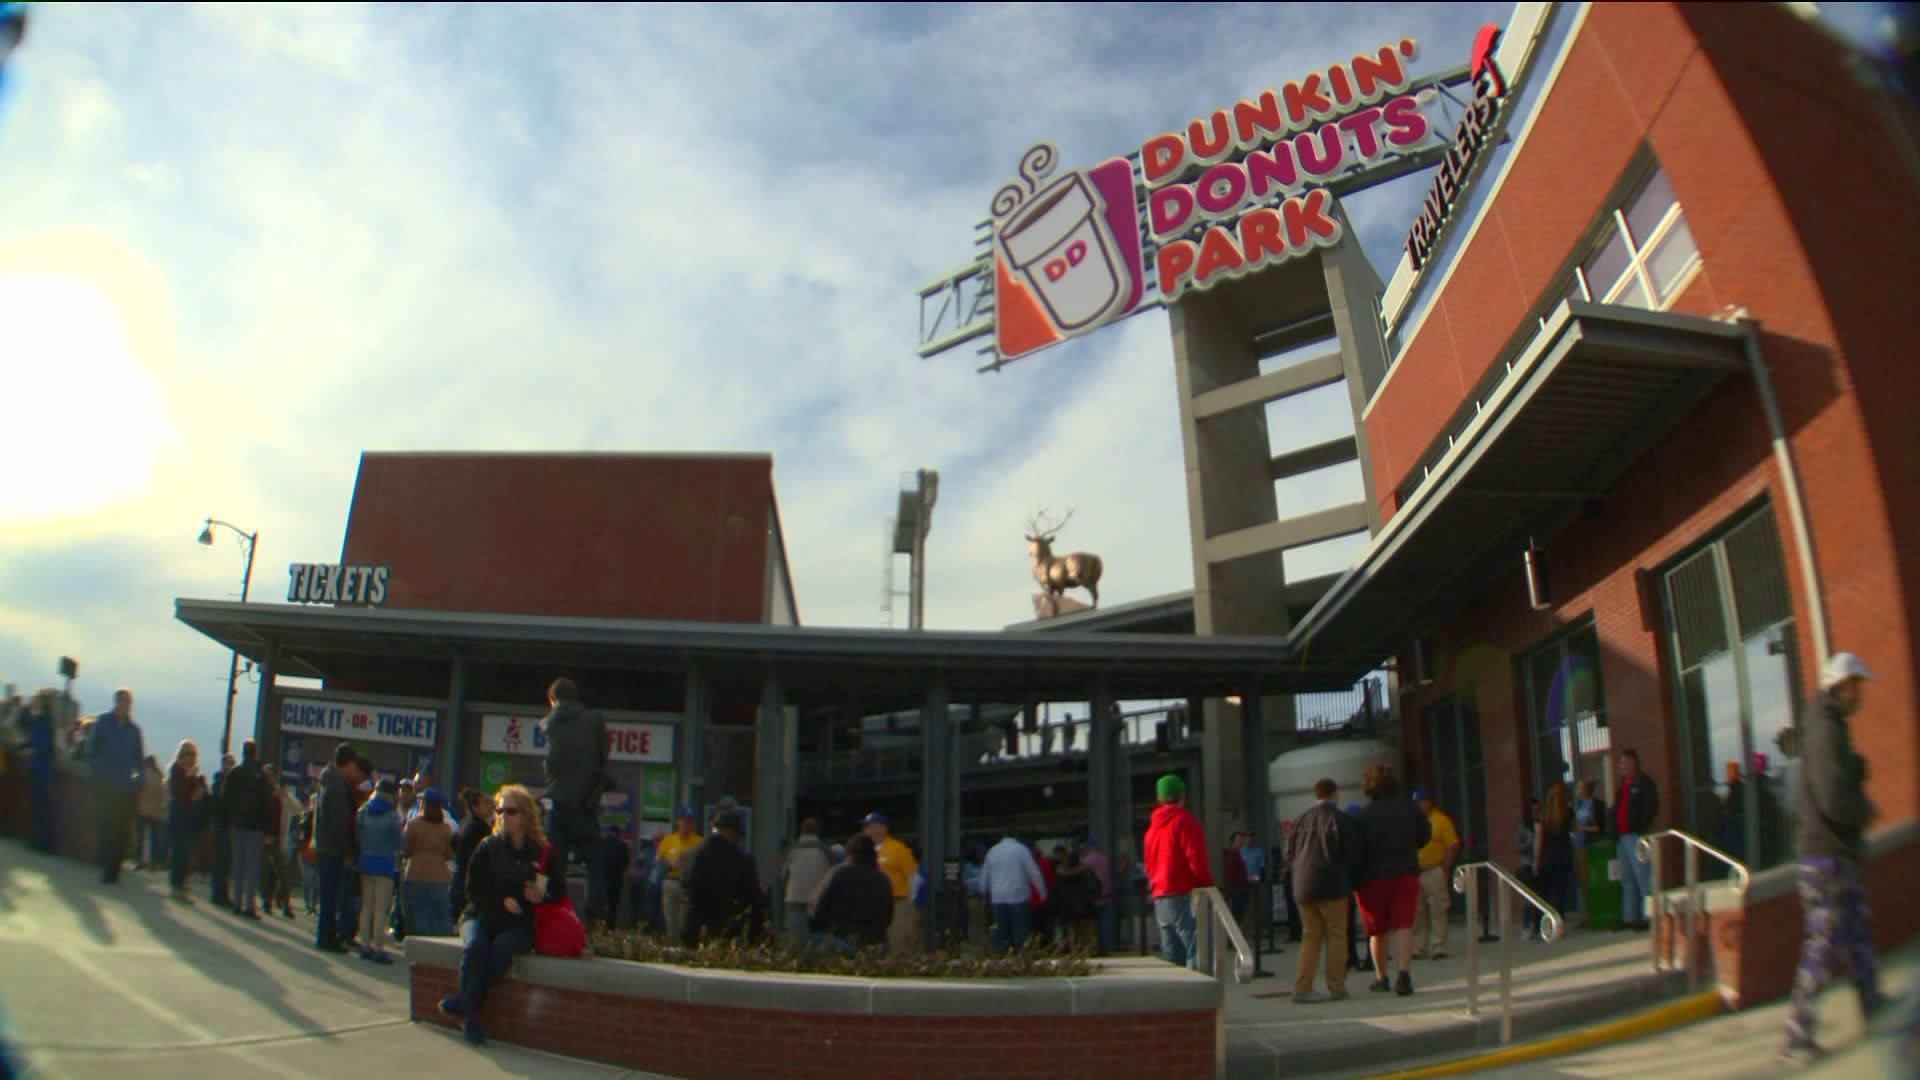 Dunkin` Doughnuts stadium is officially open